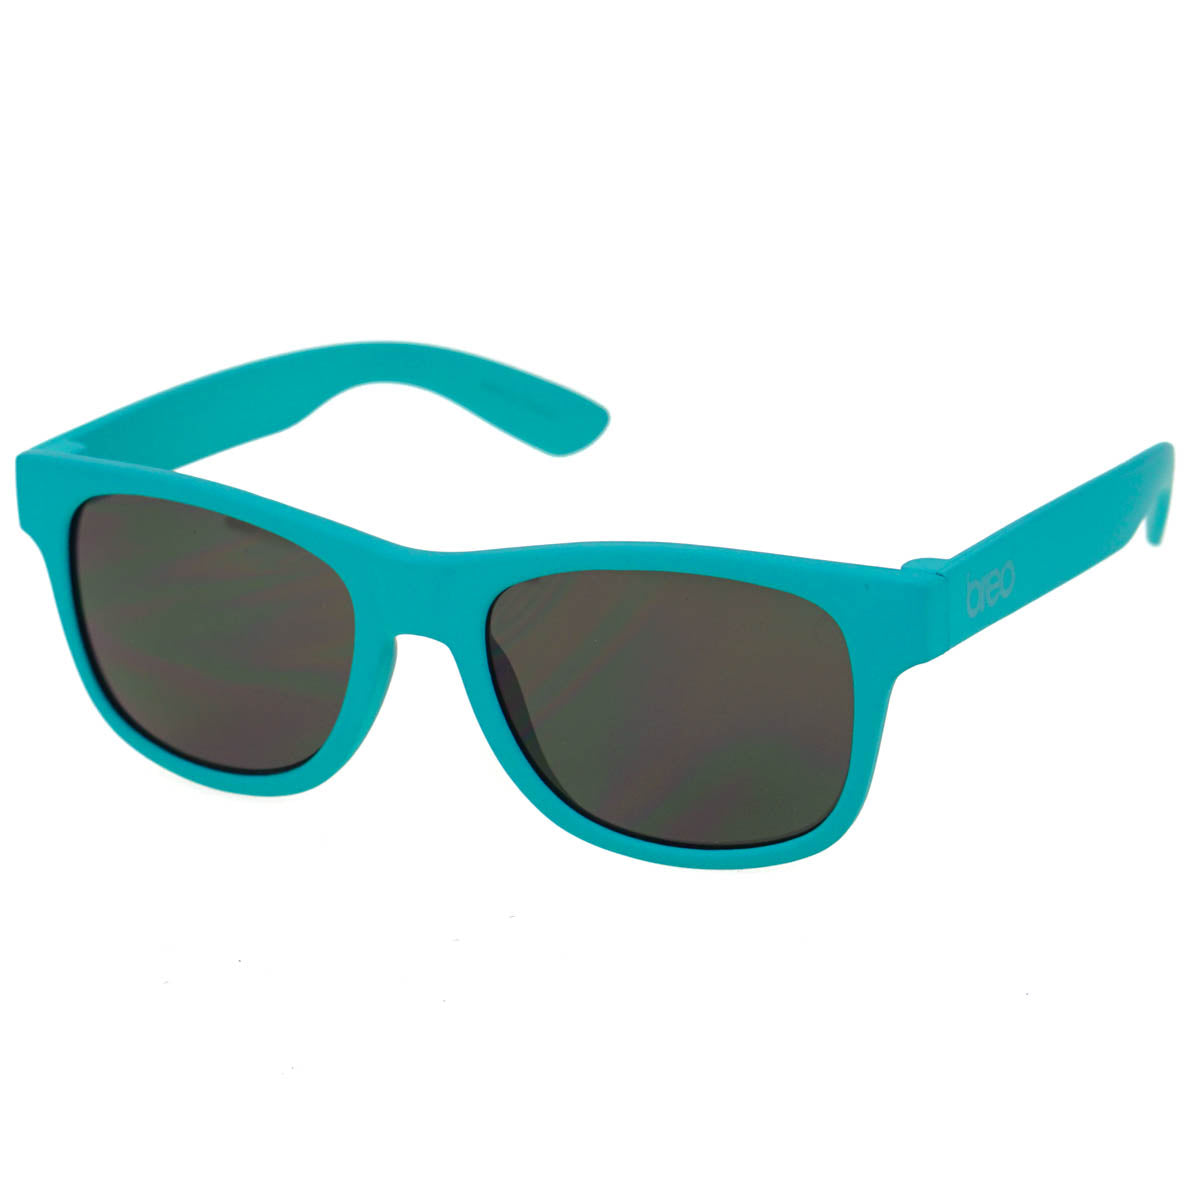 Breo Uptone Junior Aqua Sunglasses